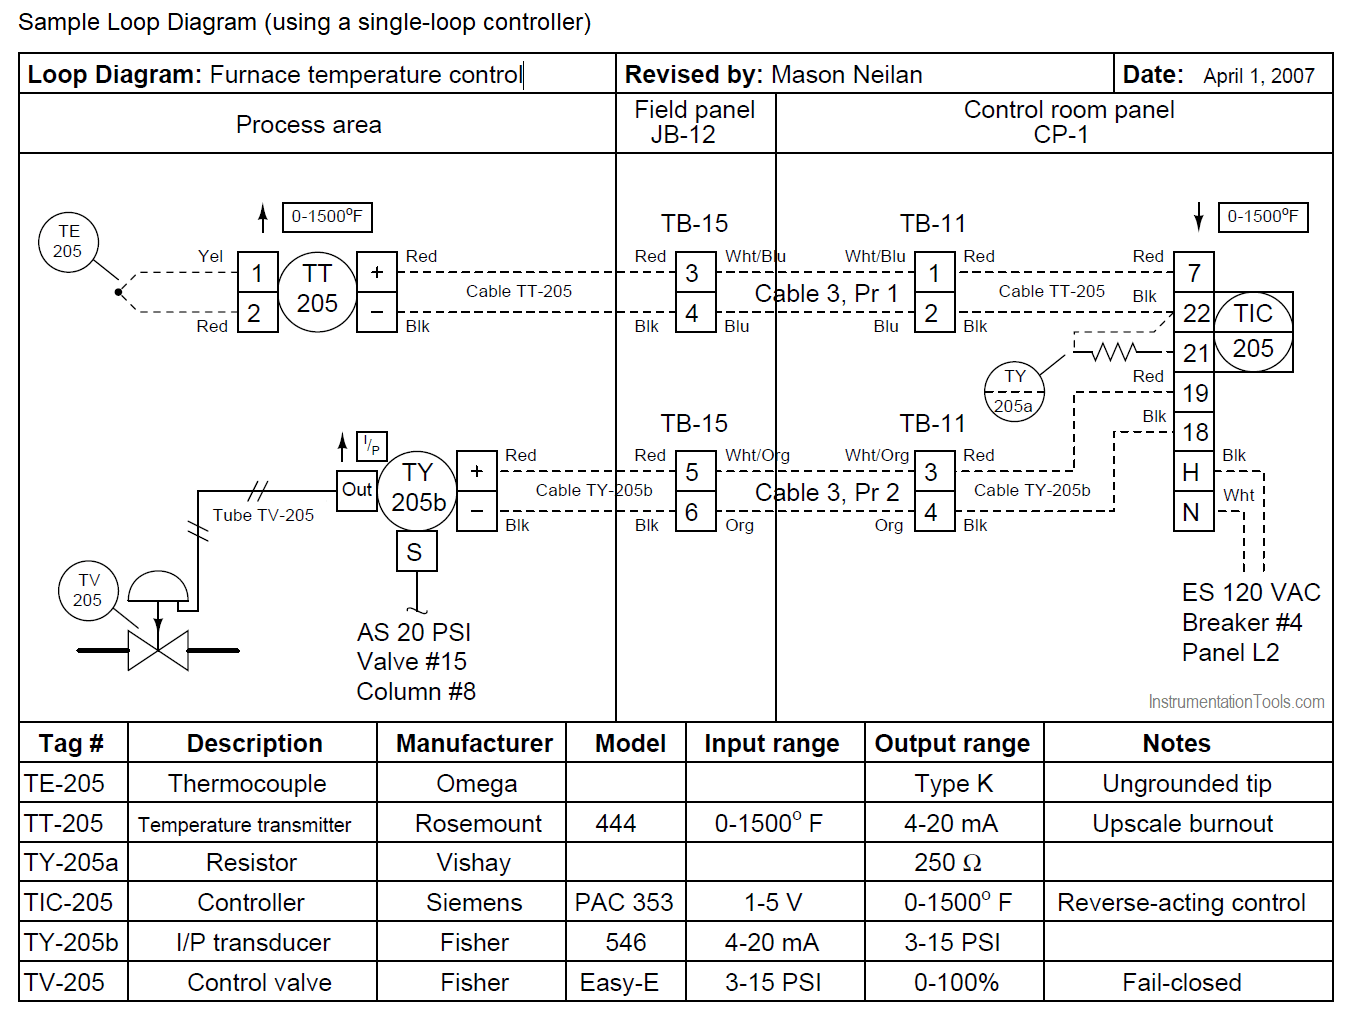 Sample Loop Diagram using a single-loop controller